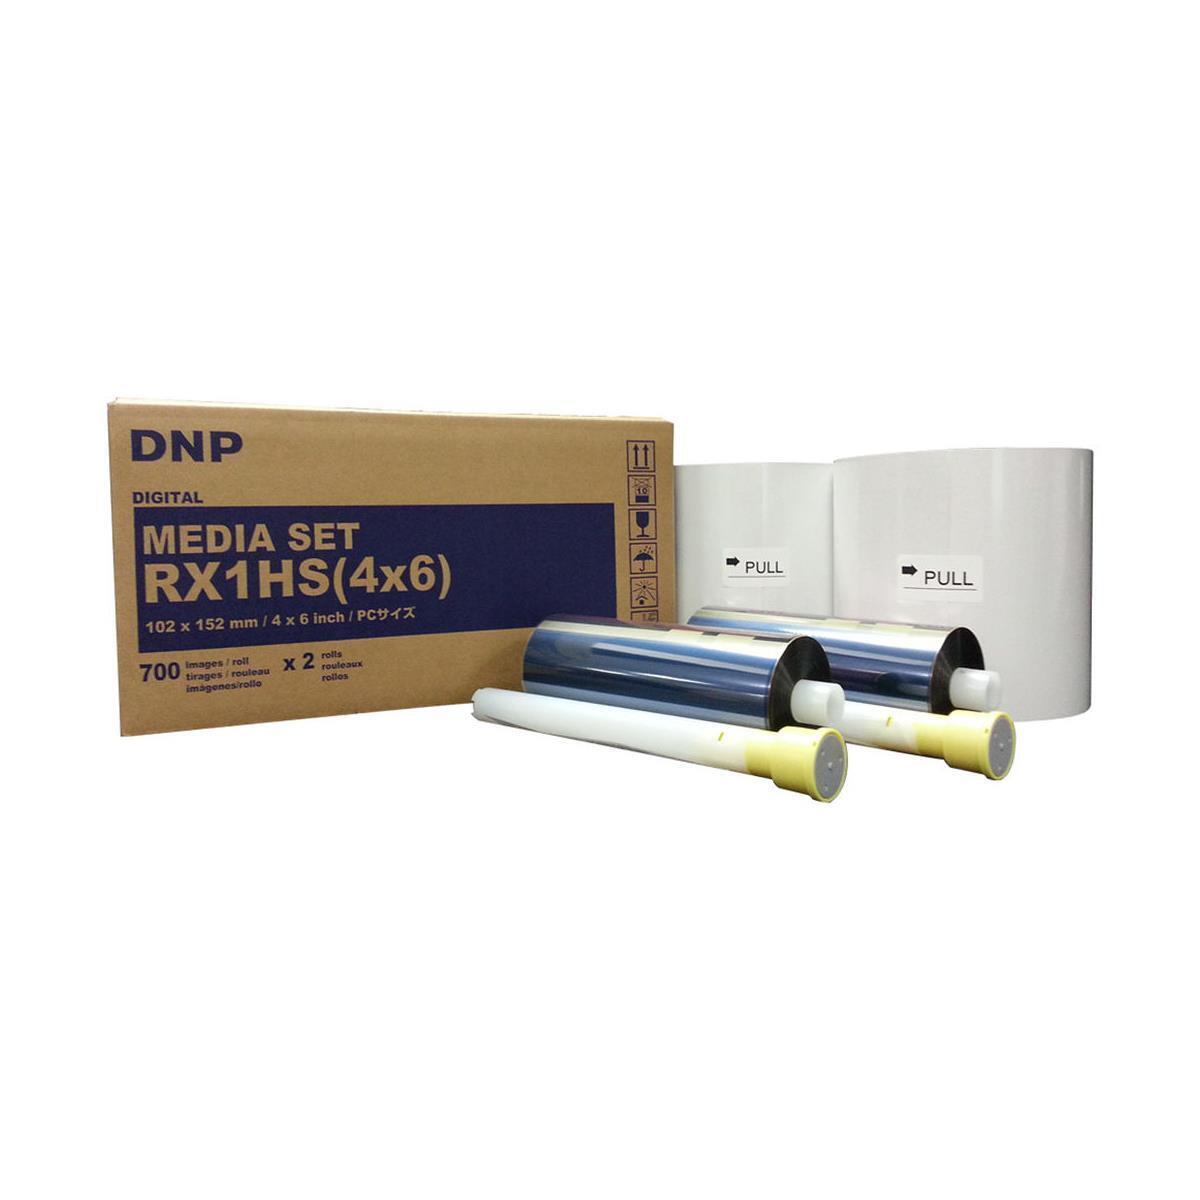 DNP Print Media for DS-RX1HS Printer - 4x6 700 Prints Per Roll (1400 Total)